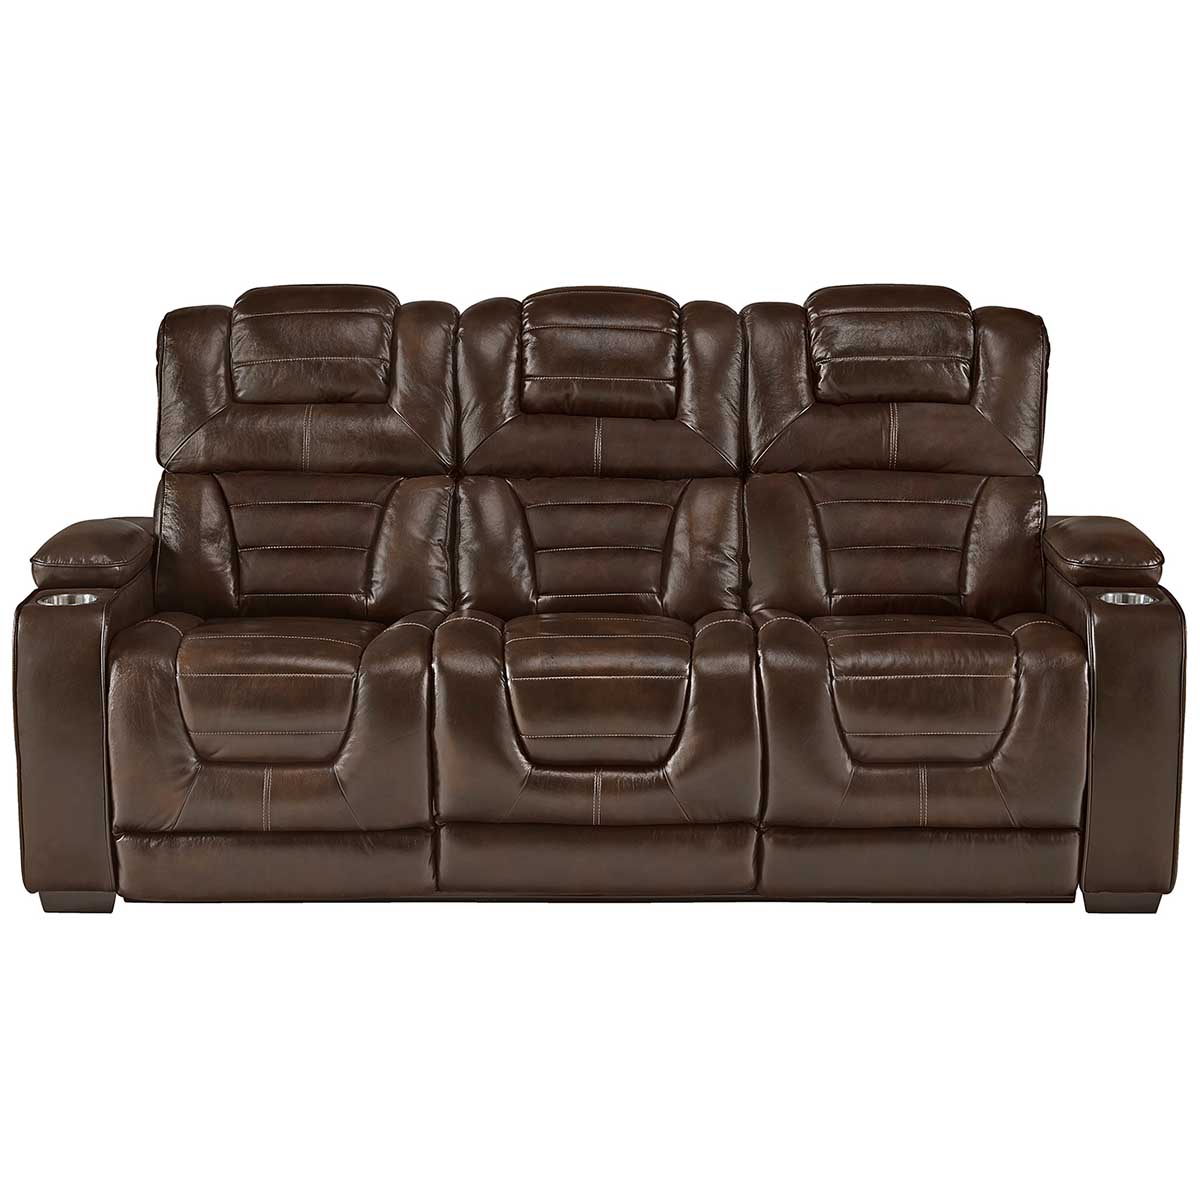 Corinthian Furniture Desert Chocolate Power Reclining Sofa